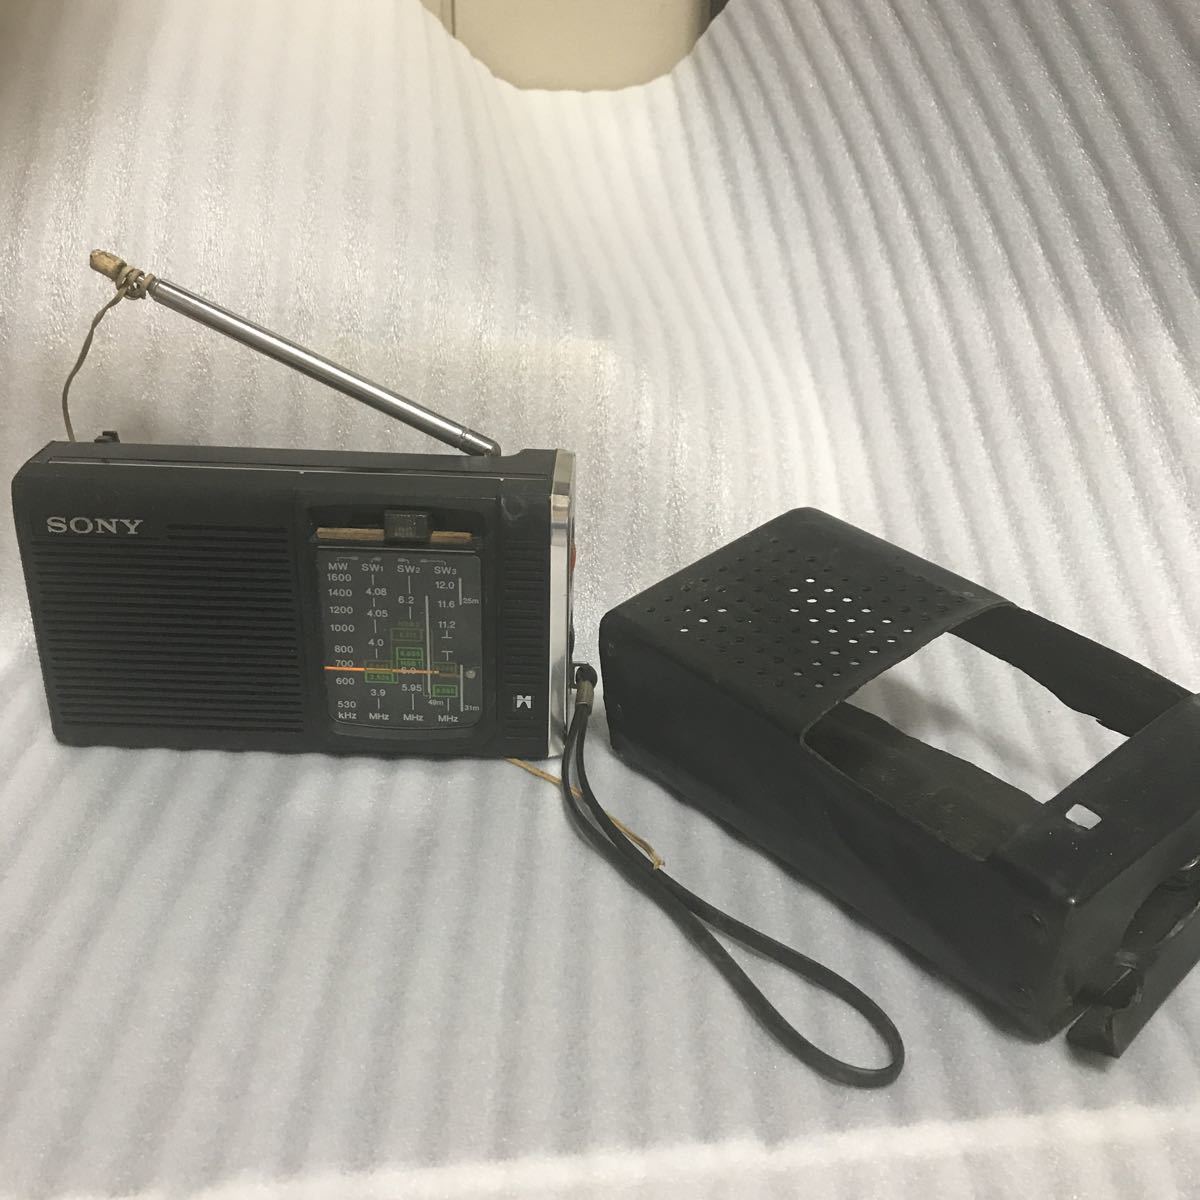  era thing Sony corporation manufacture SONY TR-4400 short wave radio junk 